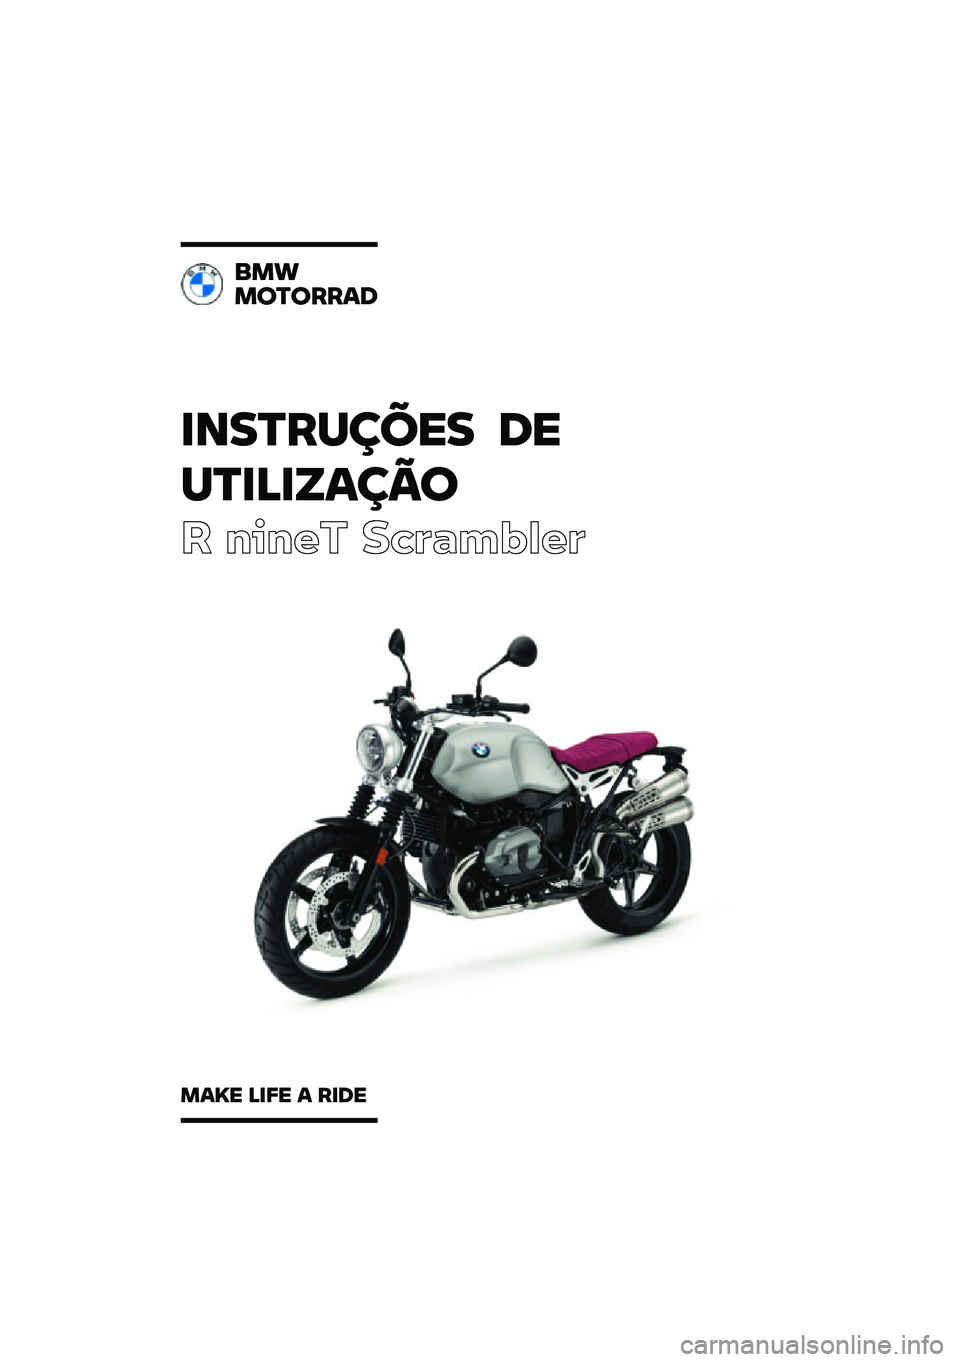 BMW MOTORRAD R NINE T SCRAMBLER 2021  Manual do condutor (in Portuguese) �������\b�	�\f� �
�\f
��������\b��

� ����� ��\b�	�
��\f�
��	
���
��
��
����
����\f ����\f � ���
�\f 